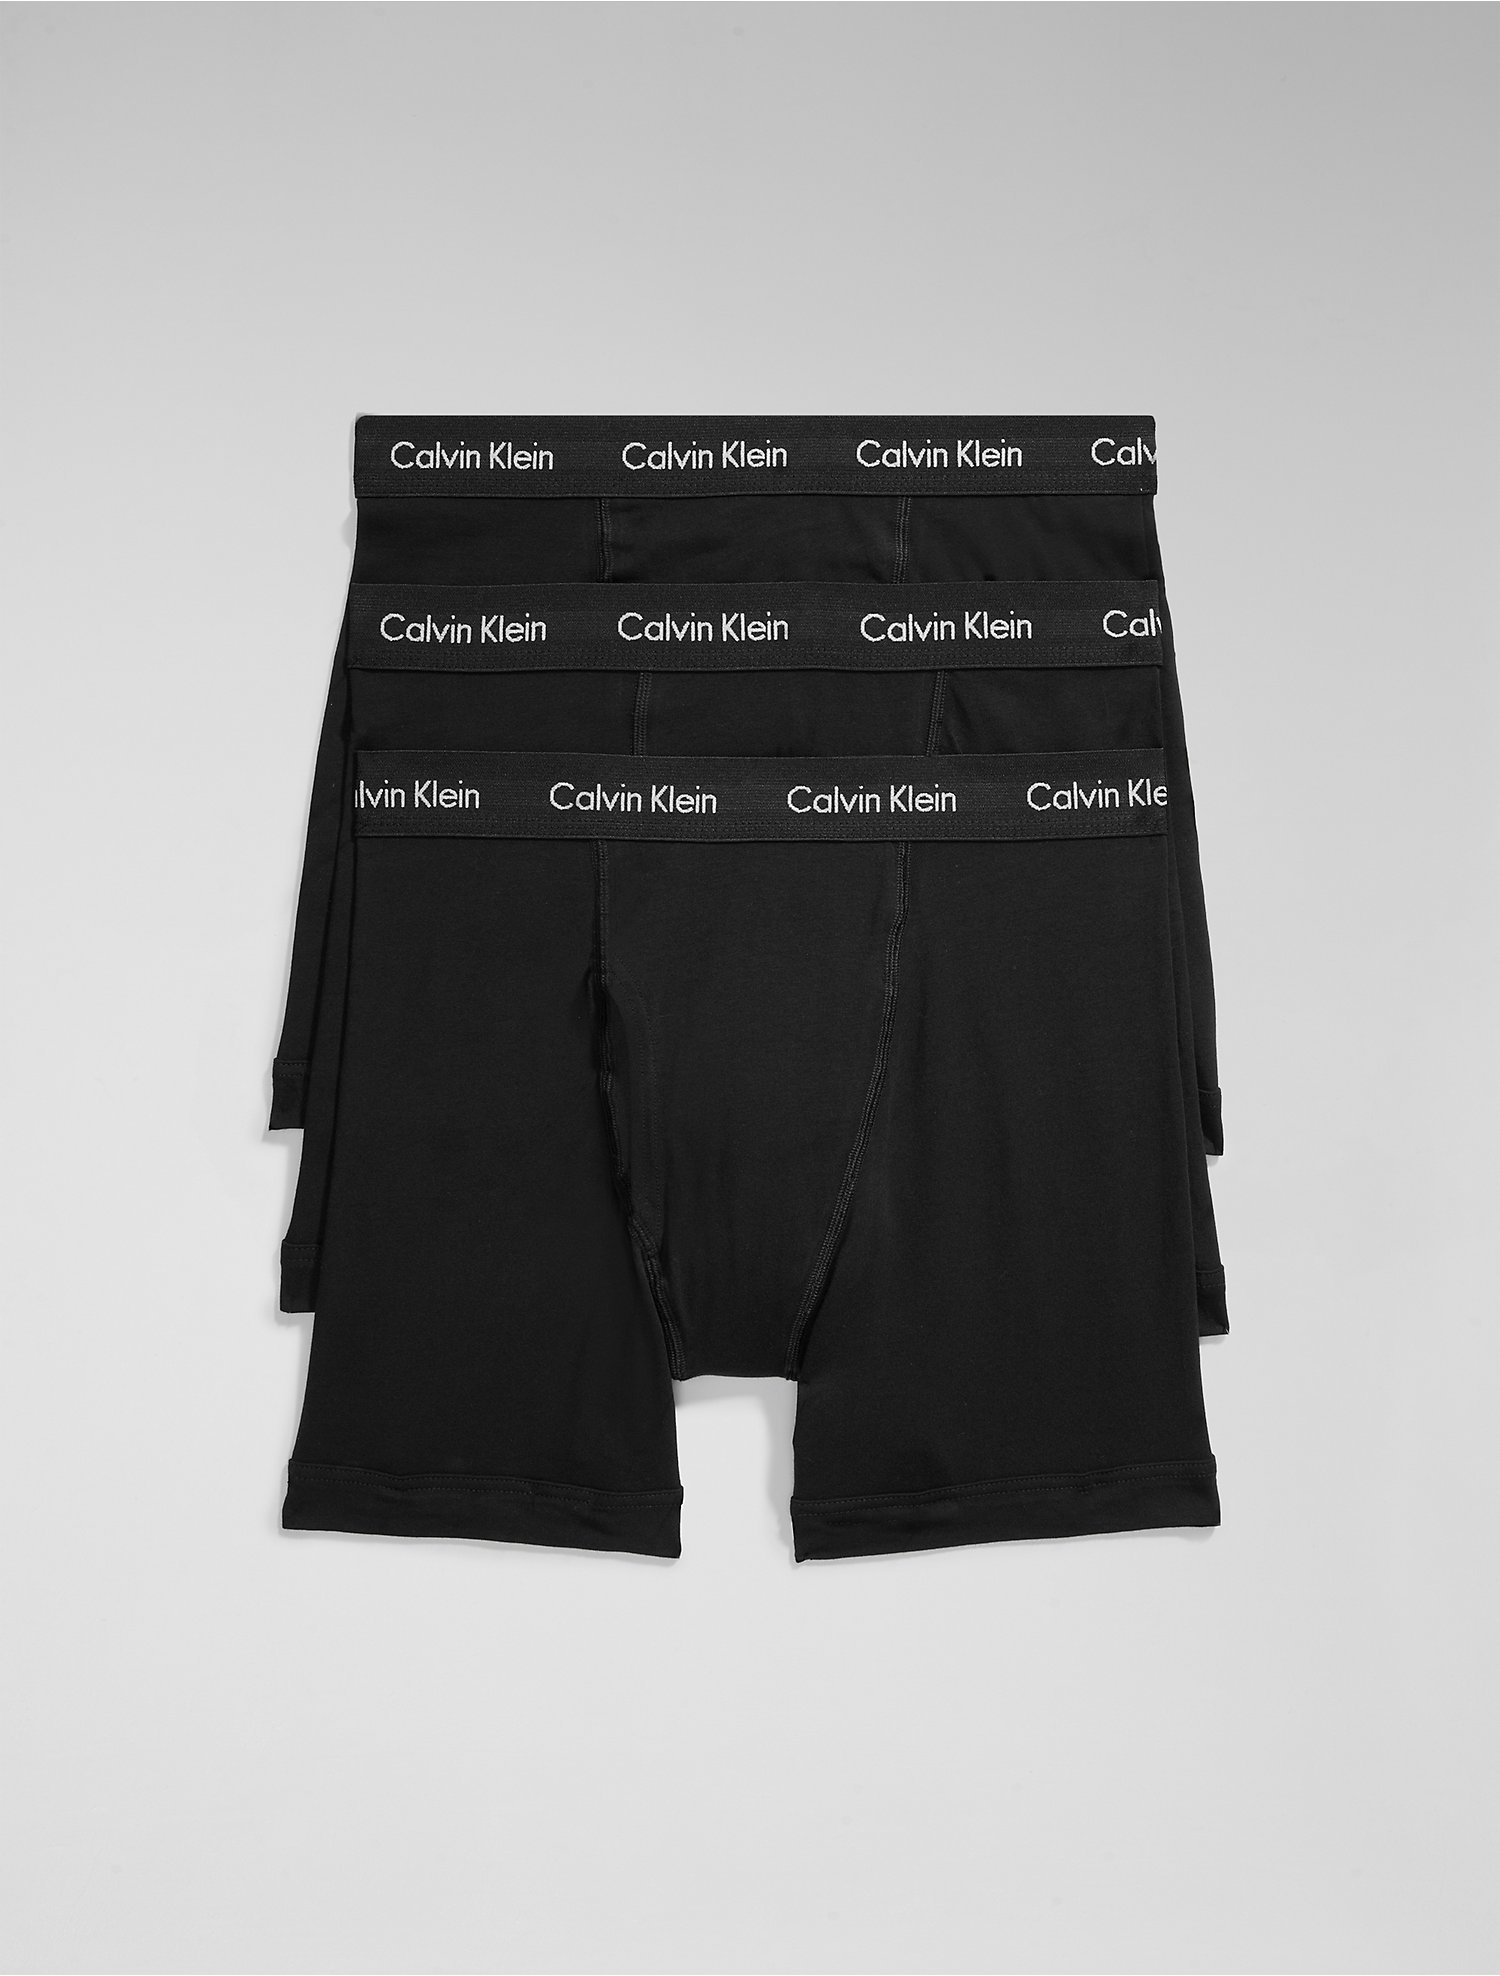 Materialisme Charmerende Dyrt Cotton Stretch 3-Pack Boxer Brief | Calvin Klein